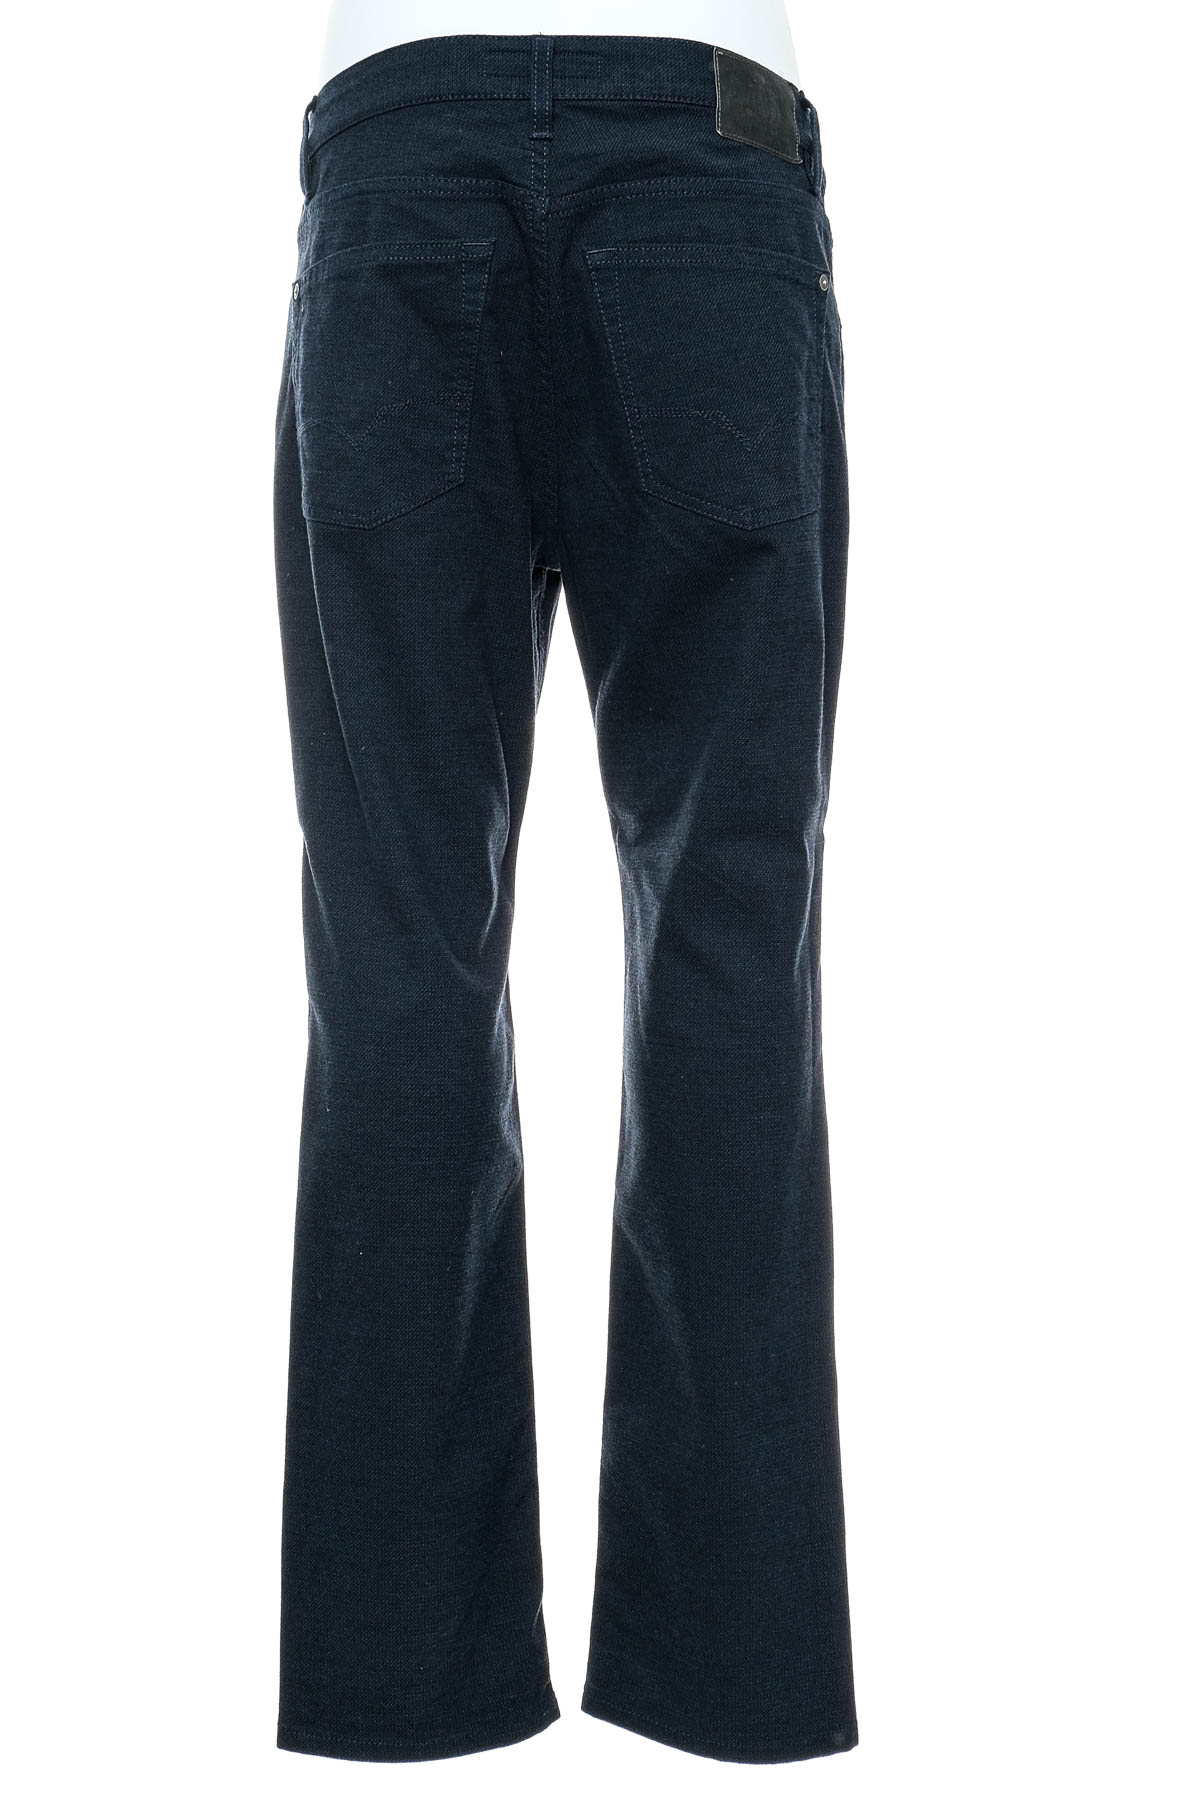 Pantalon pentru bărbați - Otto Kern - 1